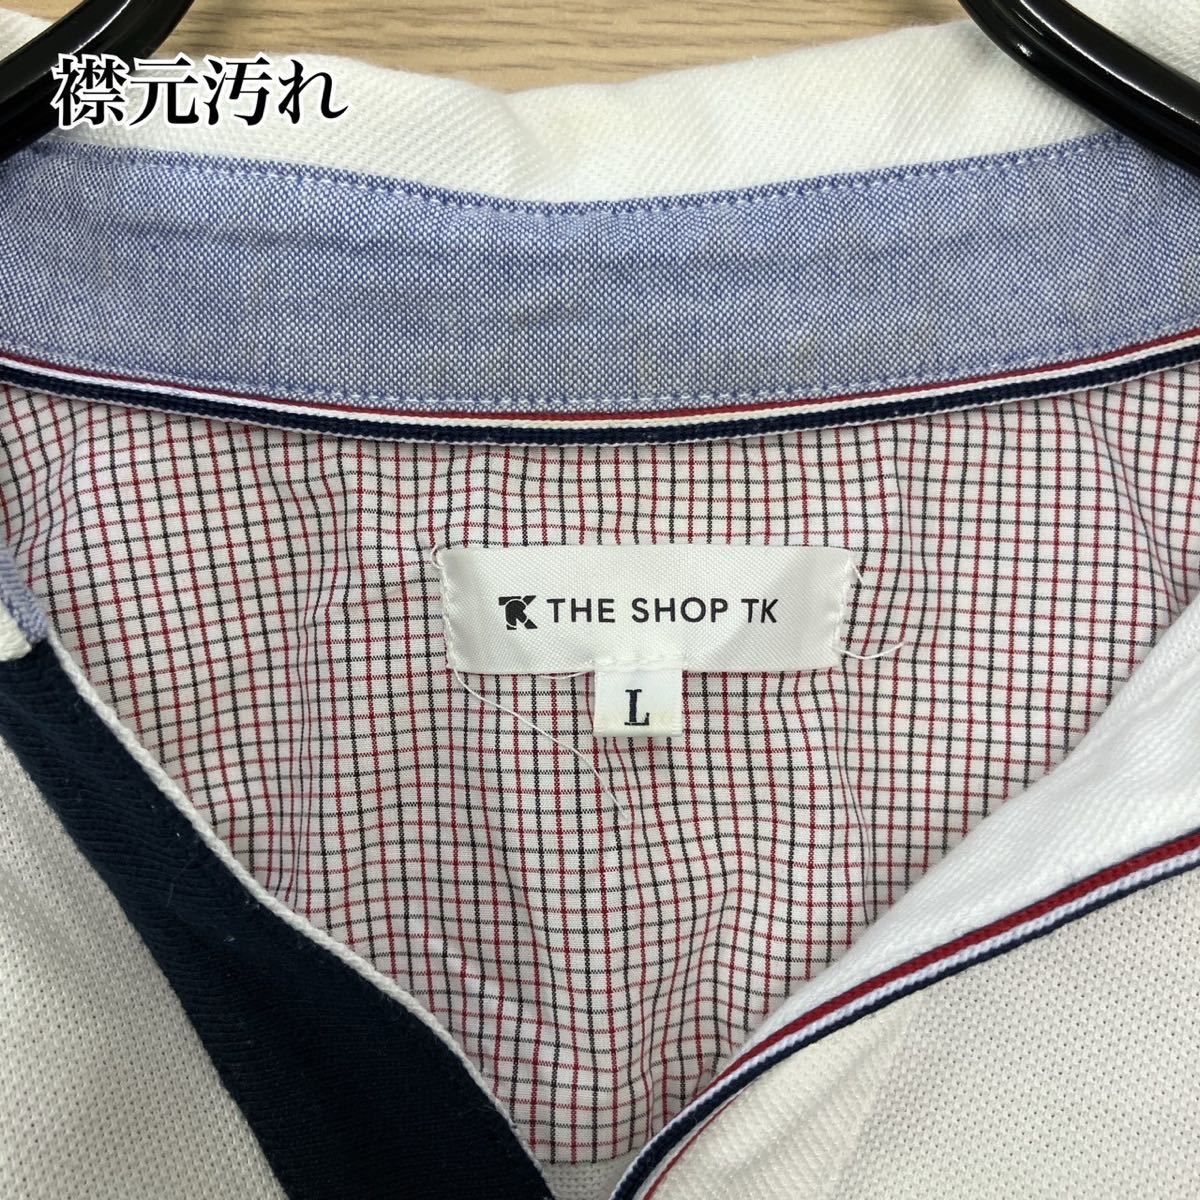 THE SHOP TK The shop tea ke- polo-shirt 616-35702 L size white collar part tricolor color line Takeo Kikuchi casual 